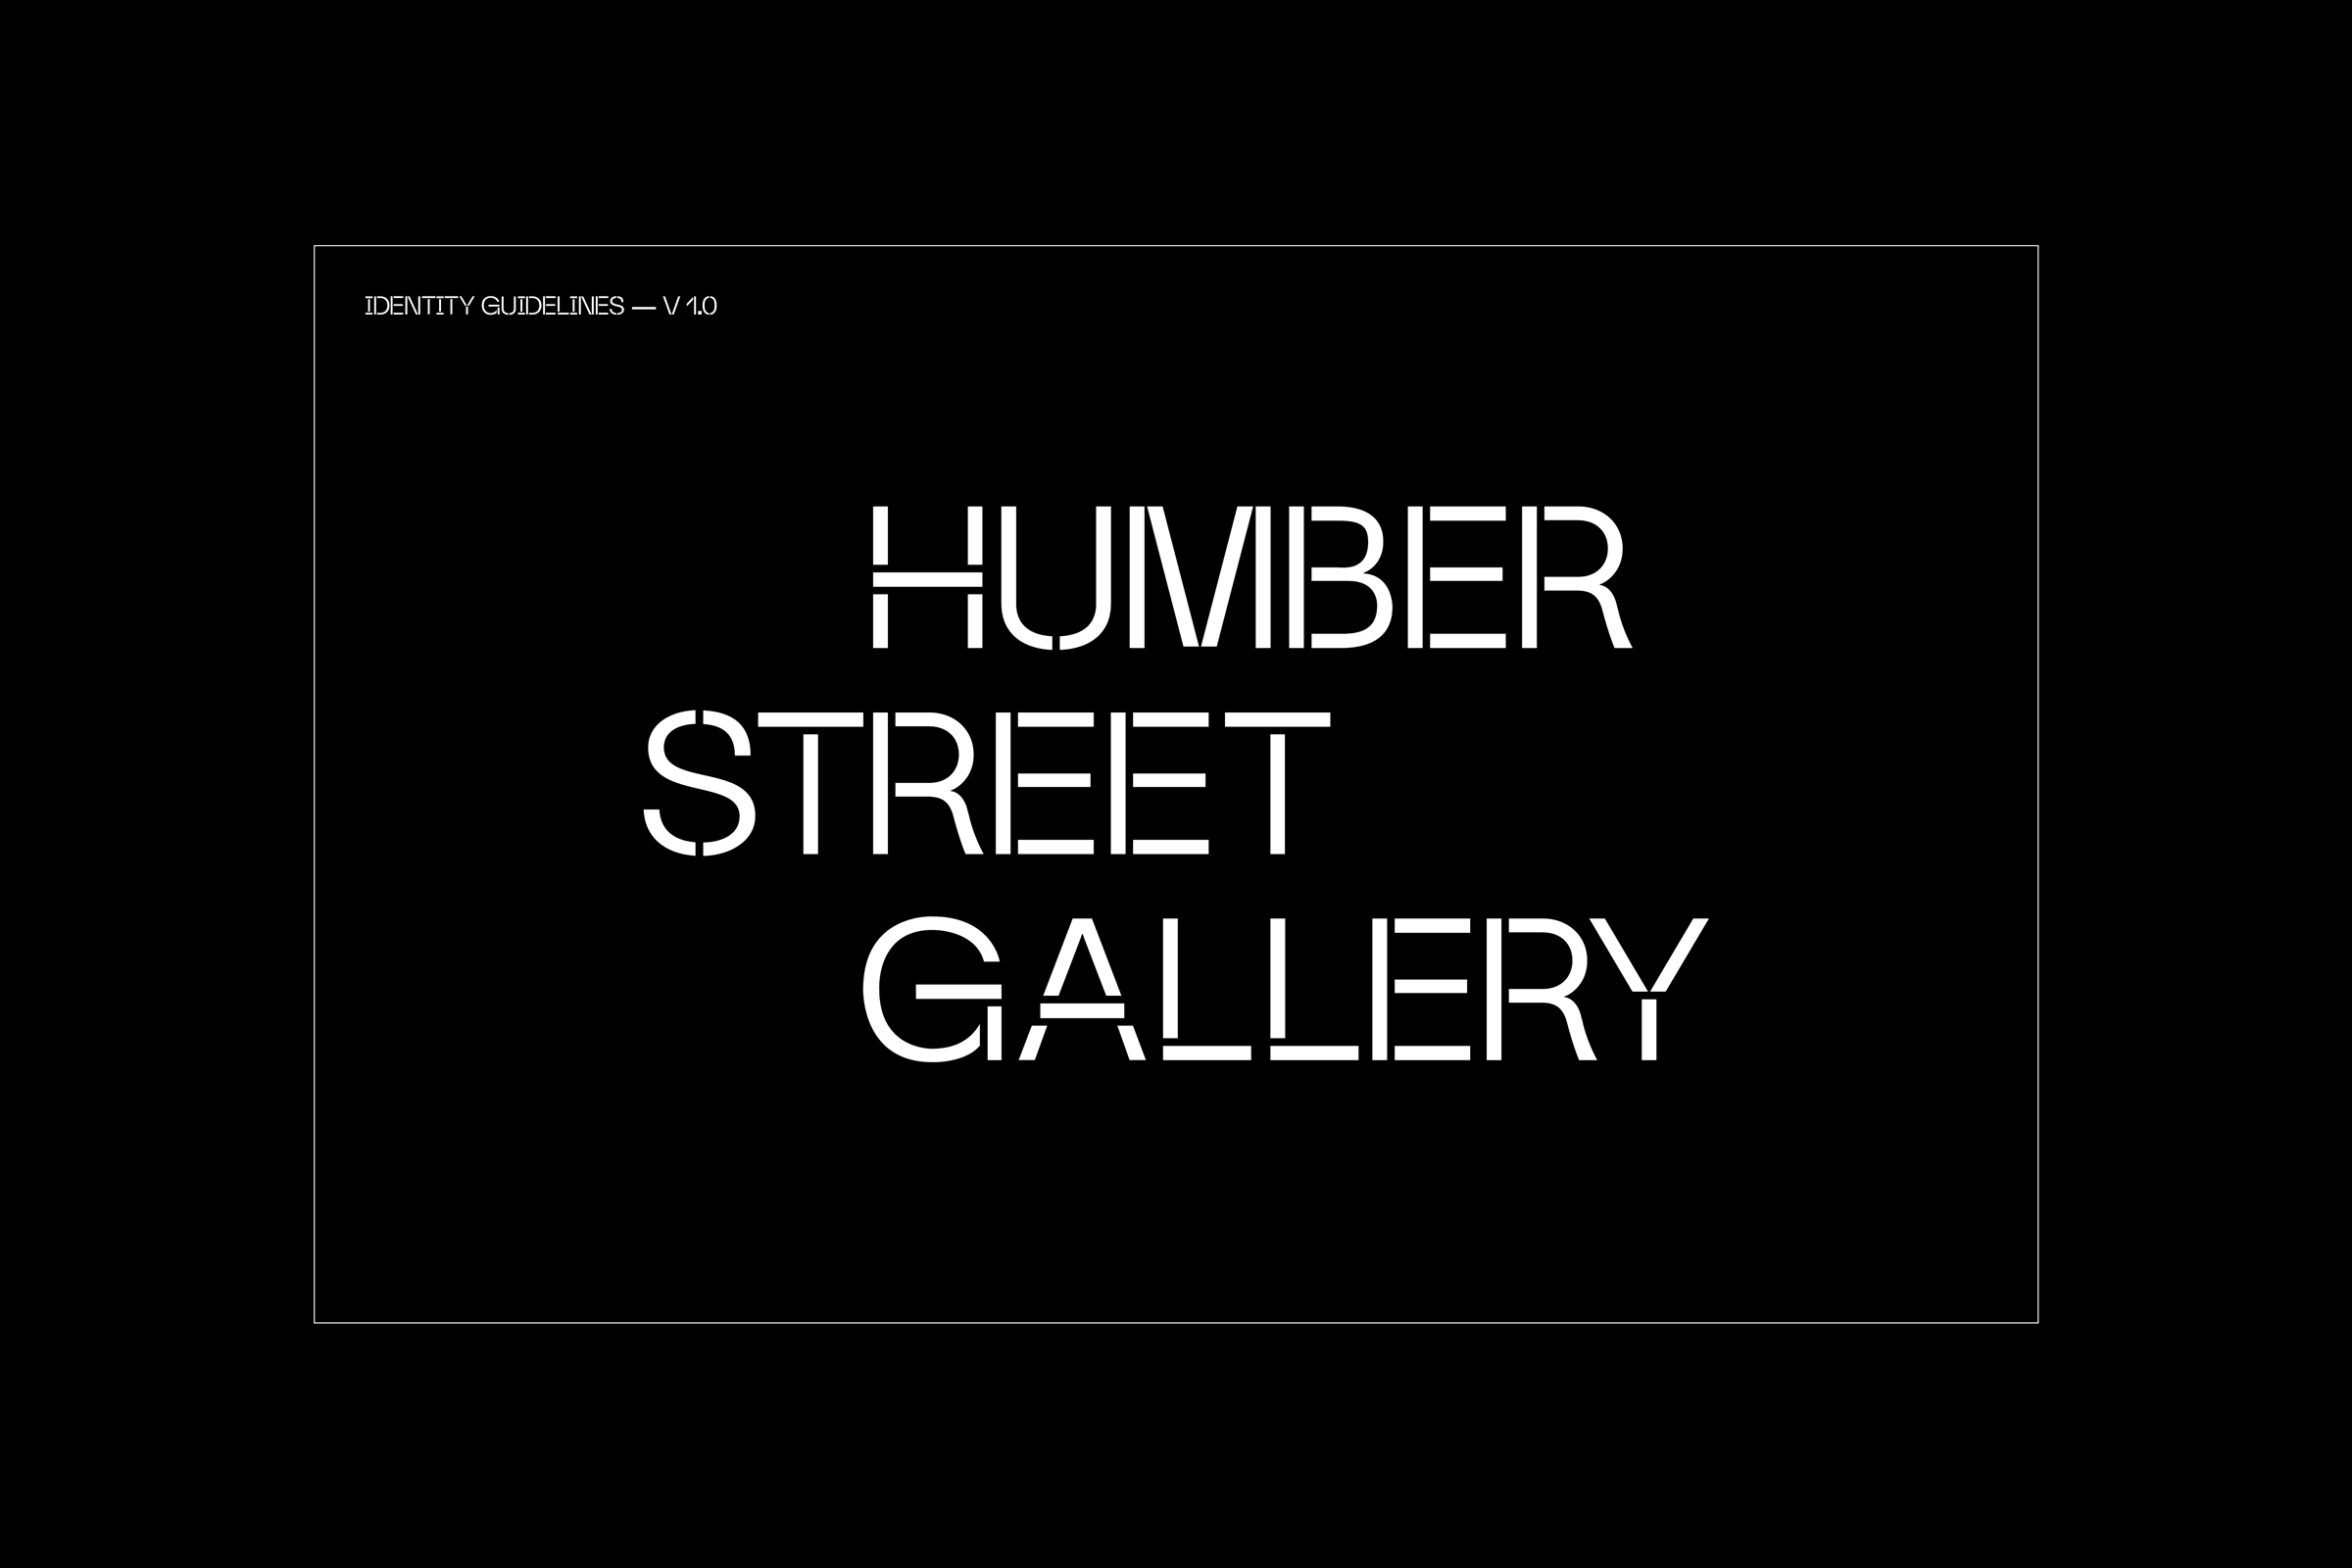 saul studio — Humber Street Gallery